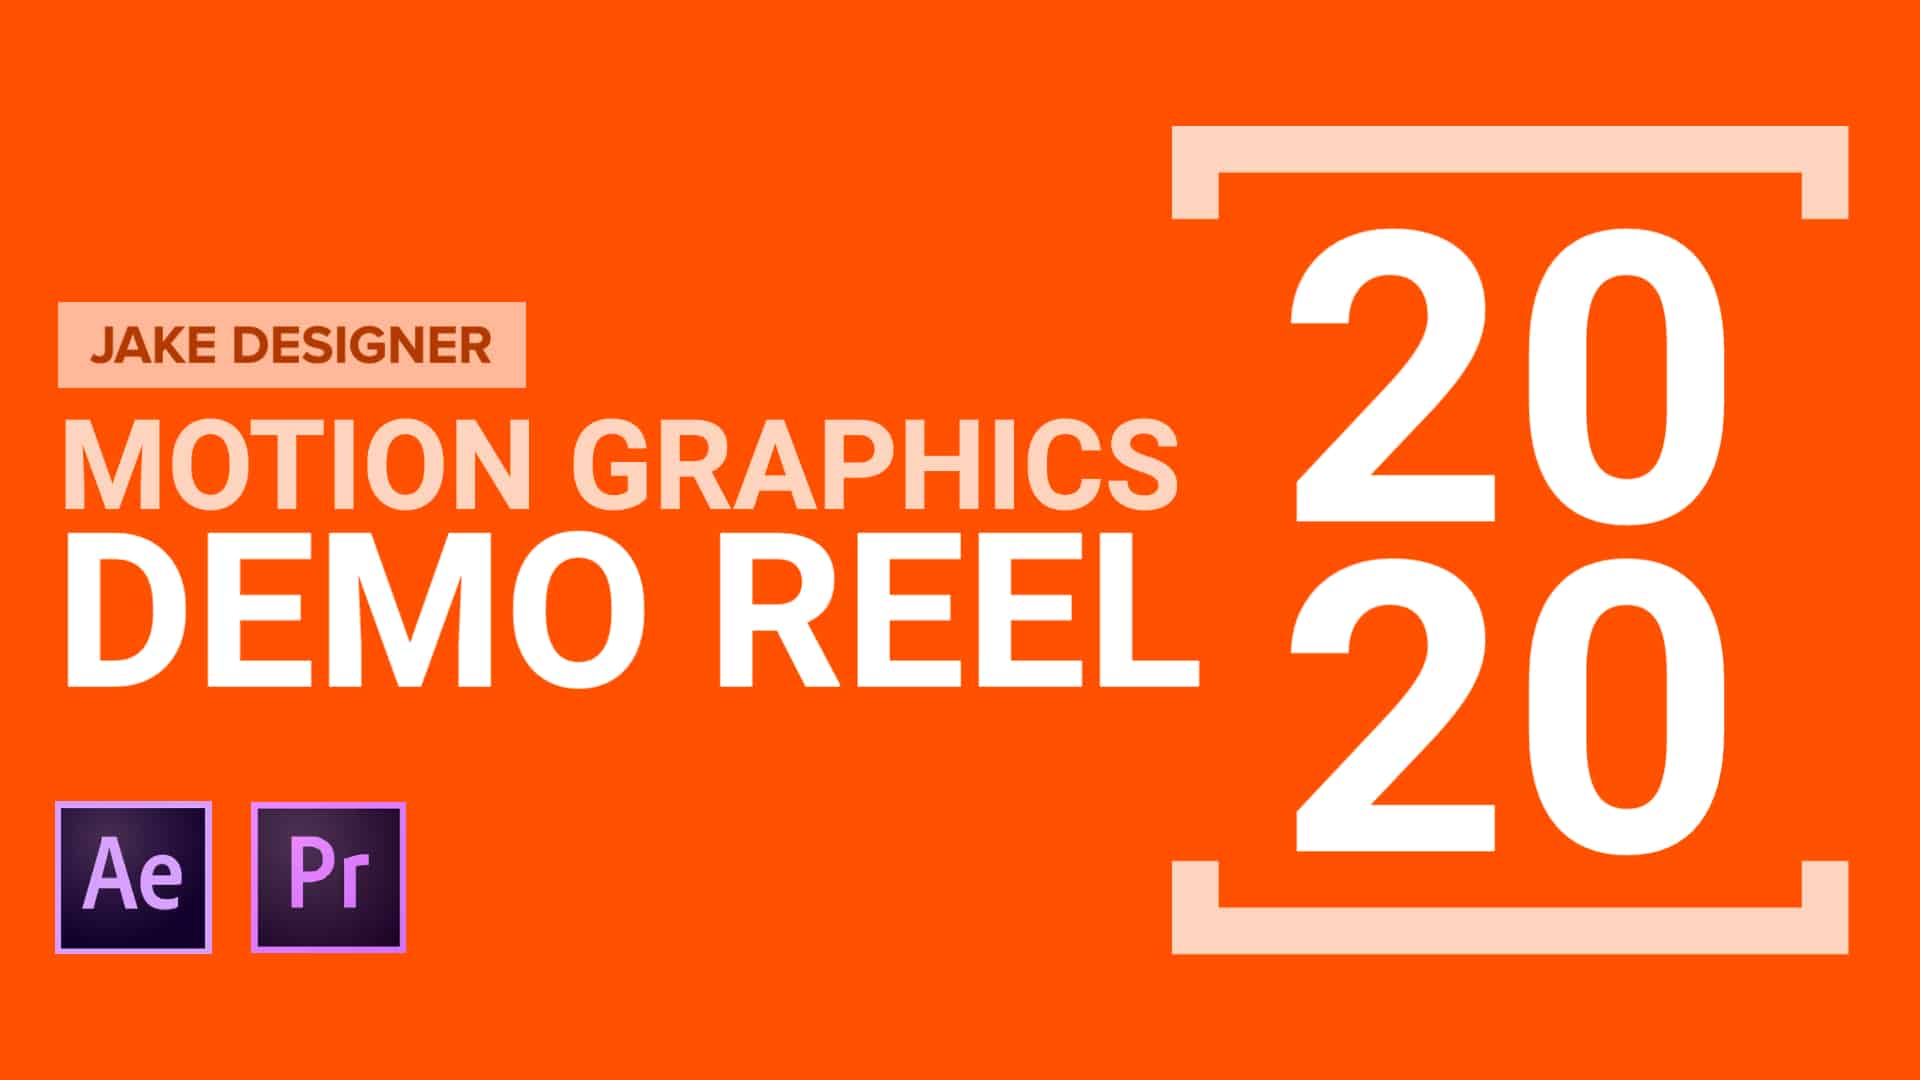 Motion Graphics Demo Reel 2020